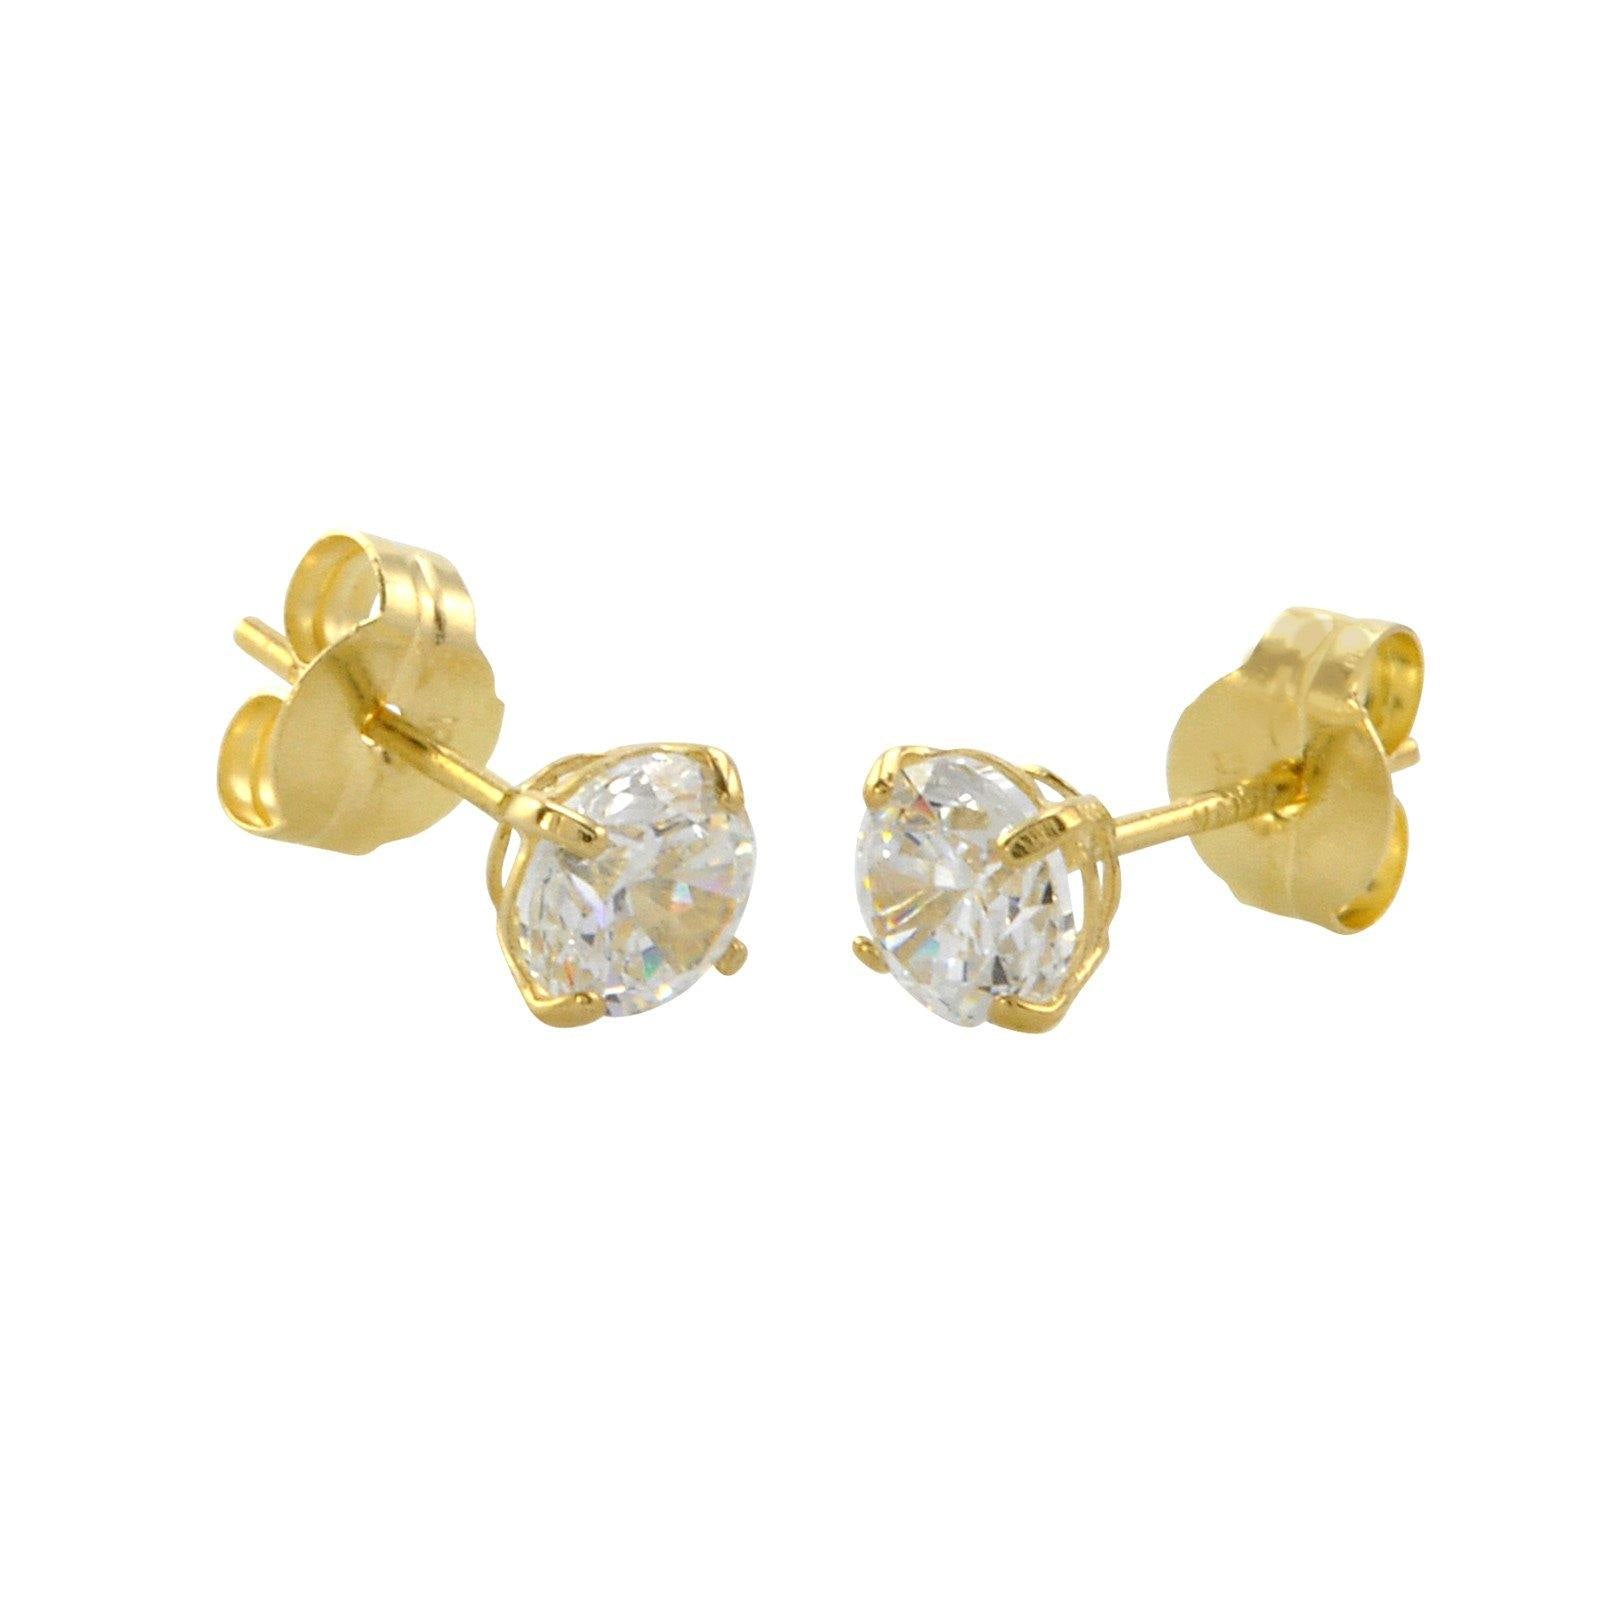 10k Yellow Gold Round Clear CZ Stud Earrings | Jewelryland.com